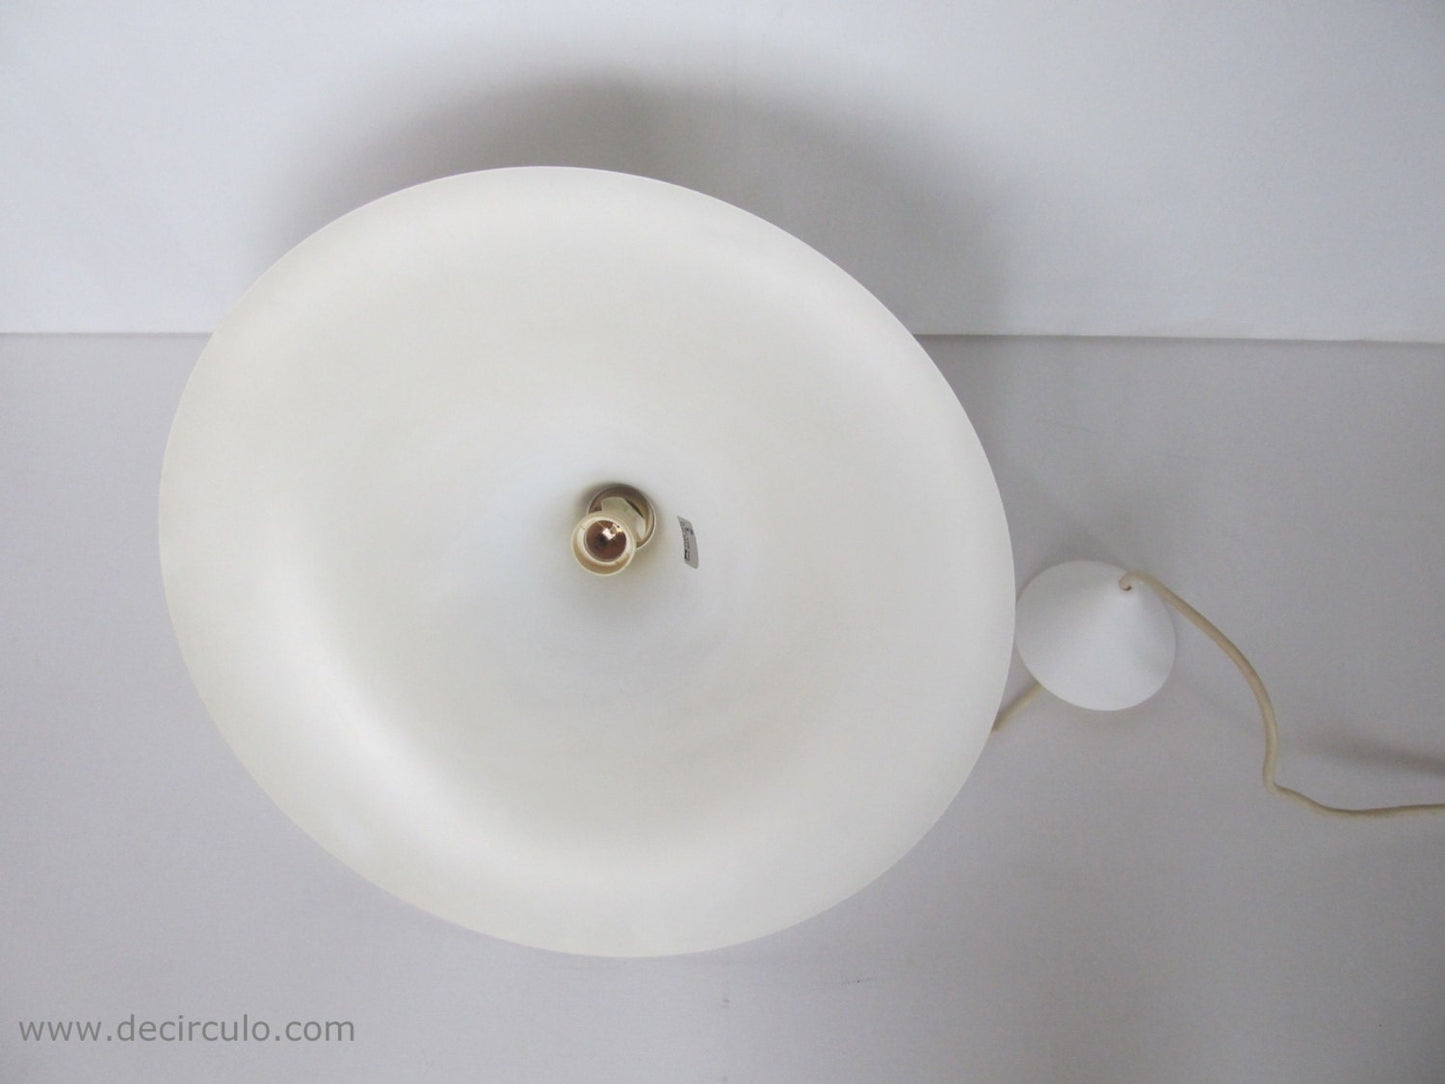 Lyskaer pendant lamp SEMI, white hanging light from the 1980s